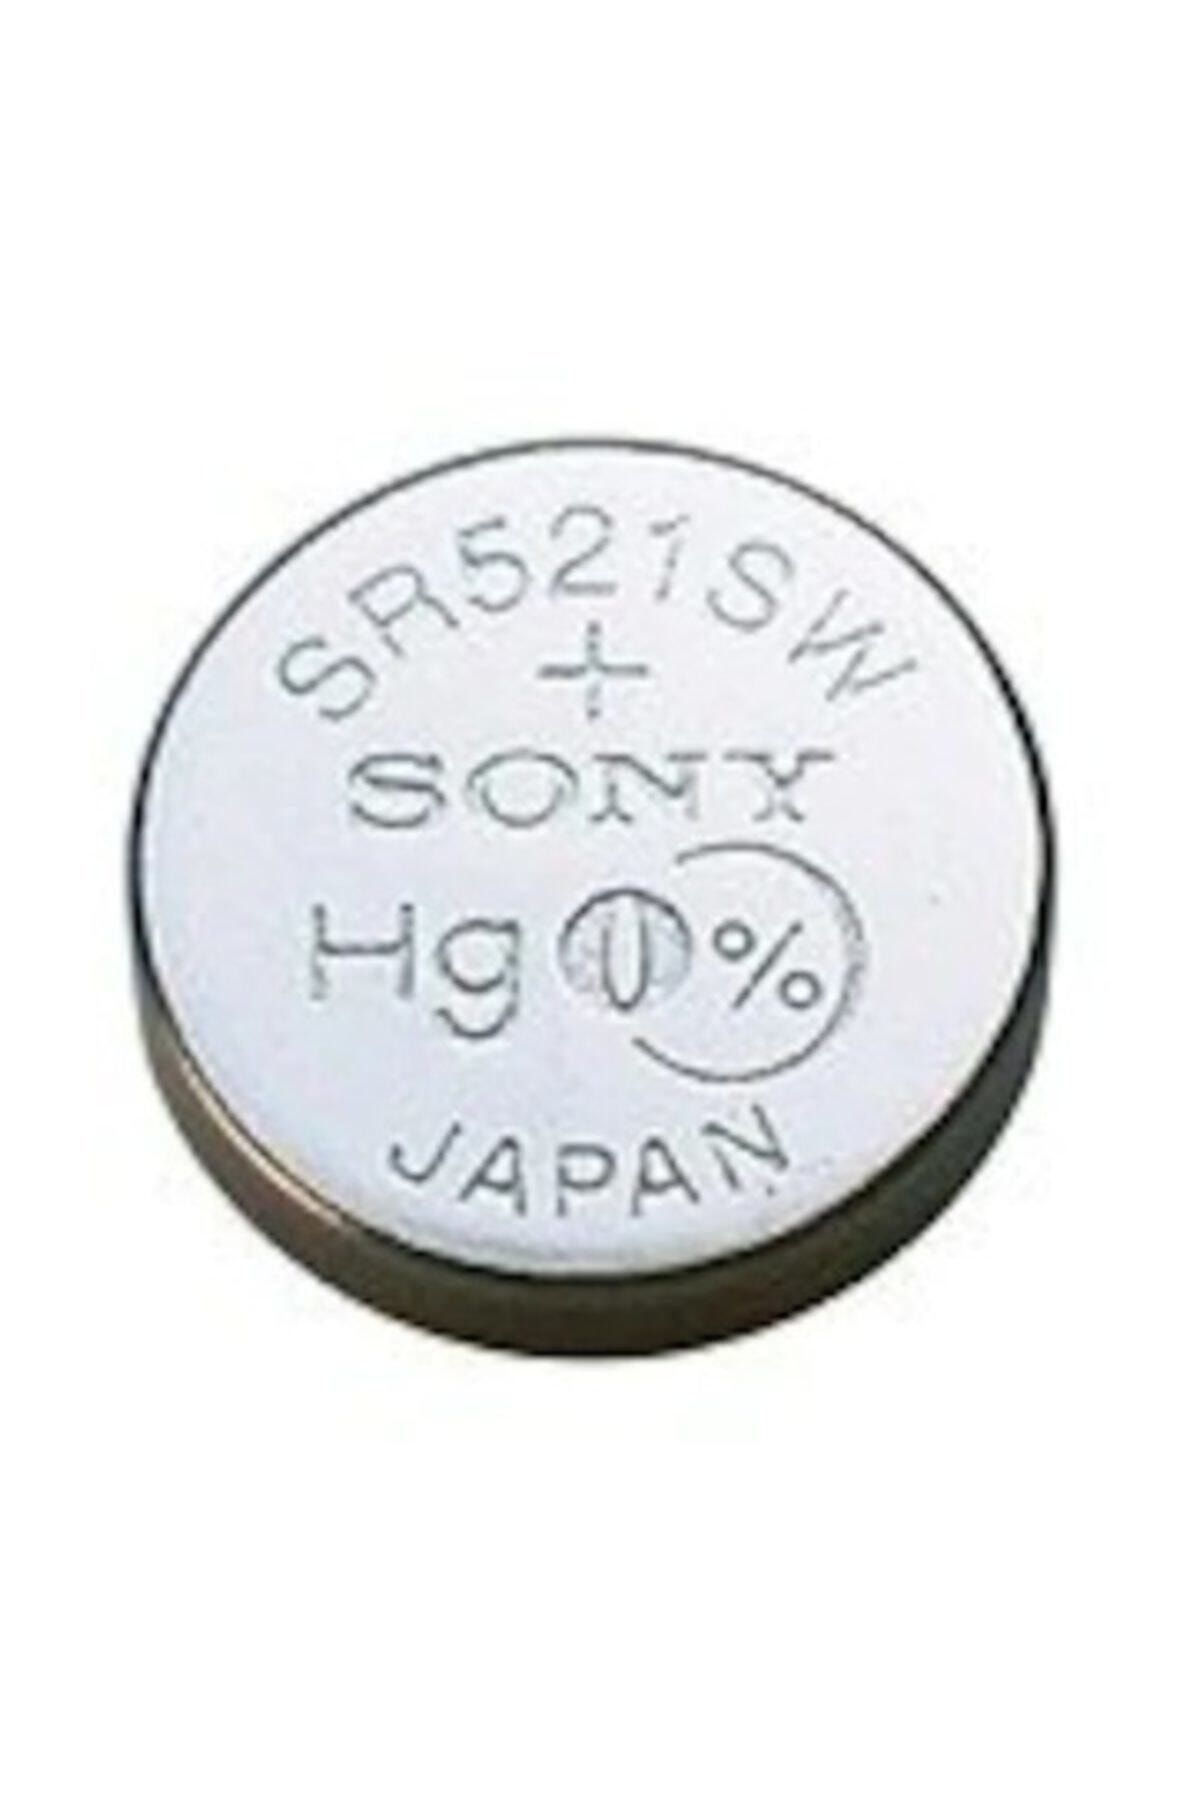 Sony Sr521sw Saat Pili